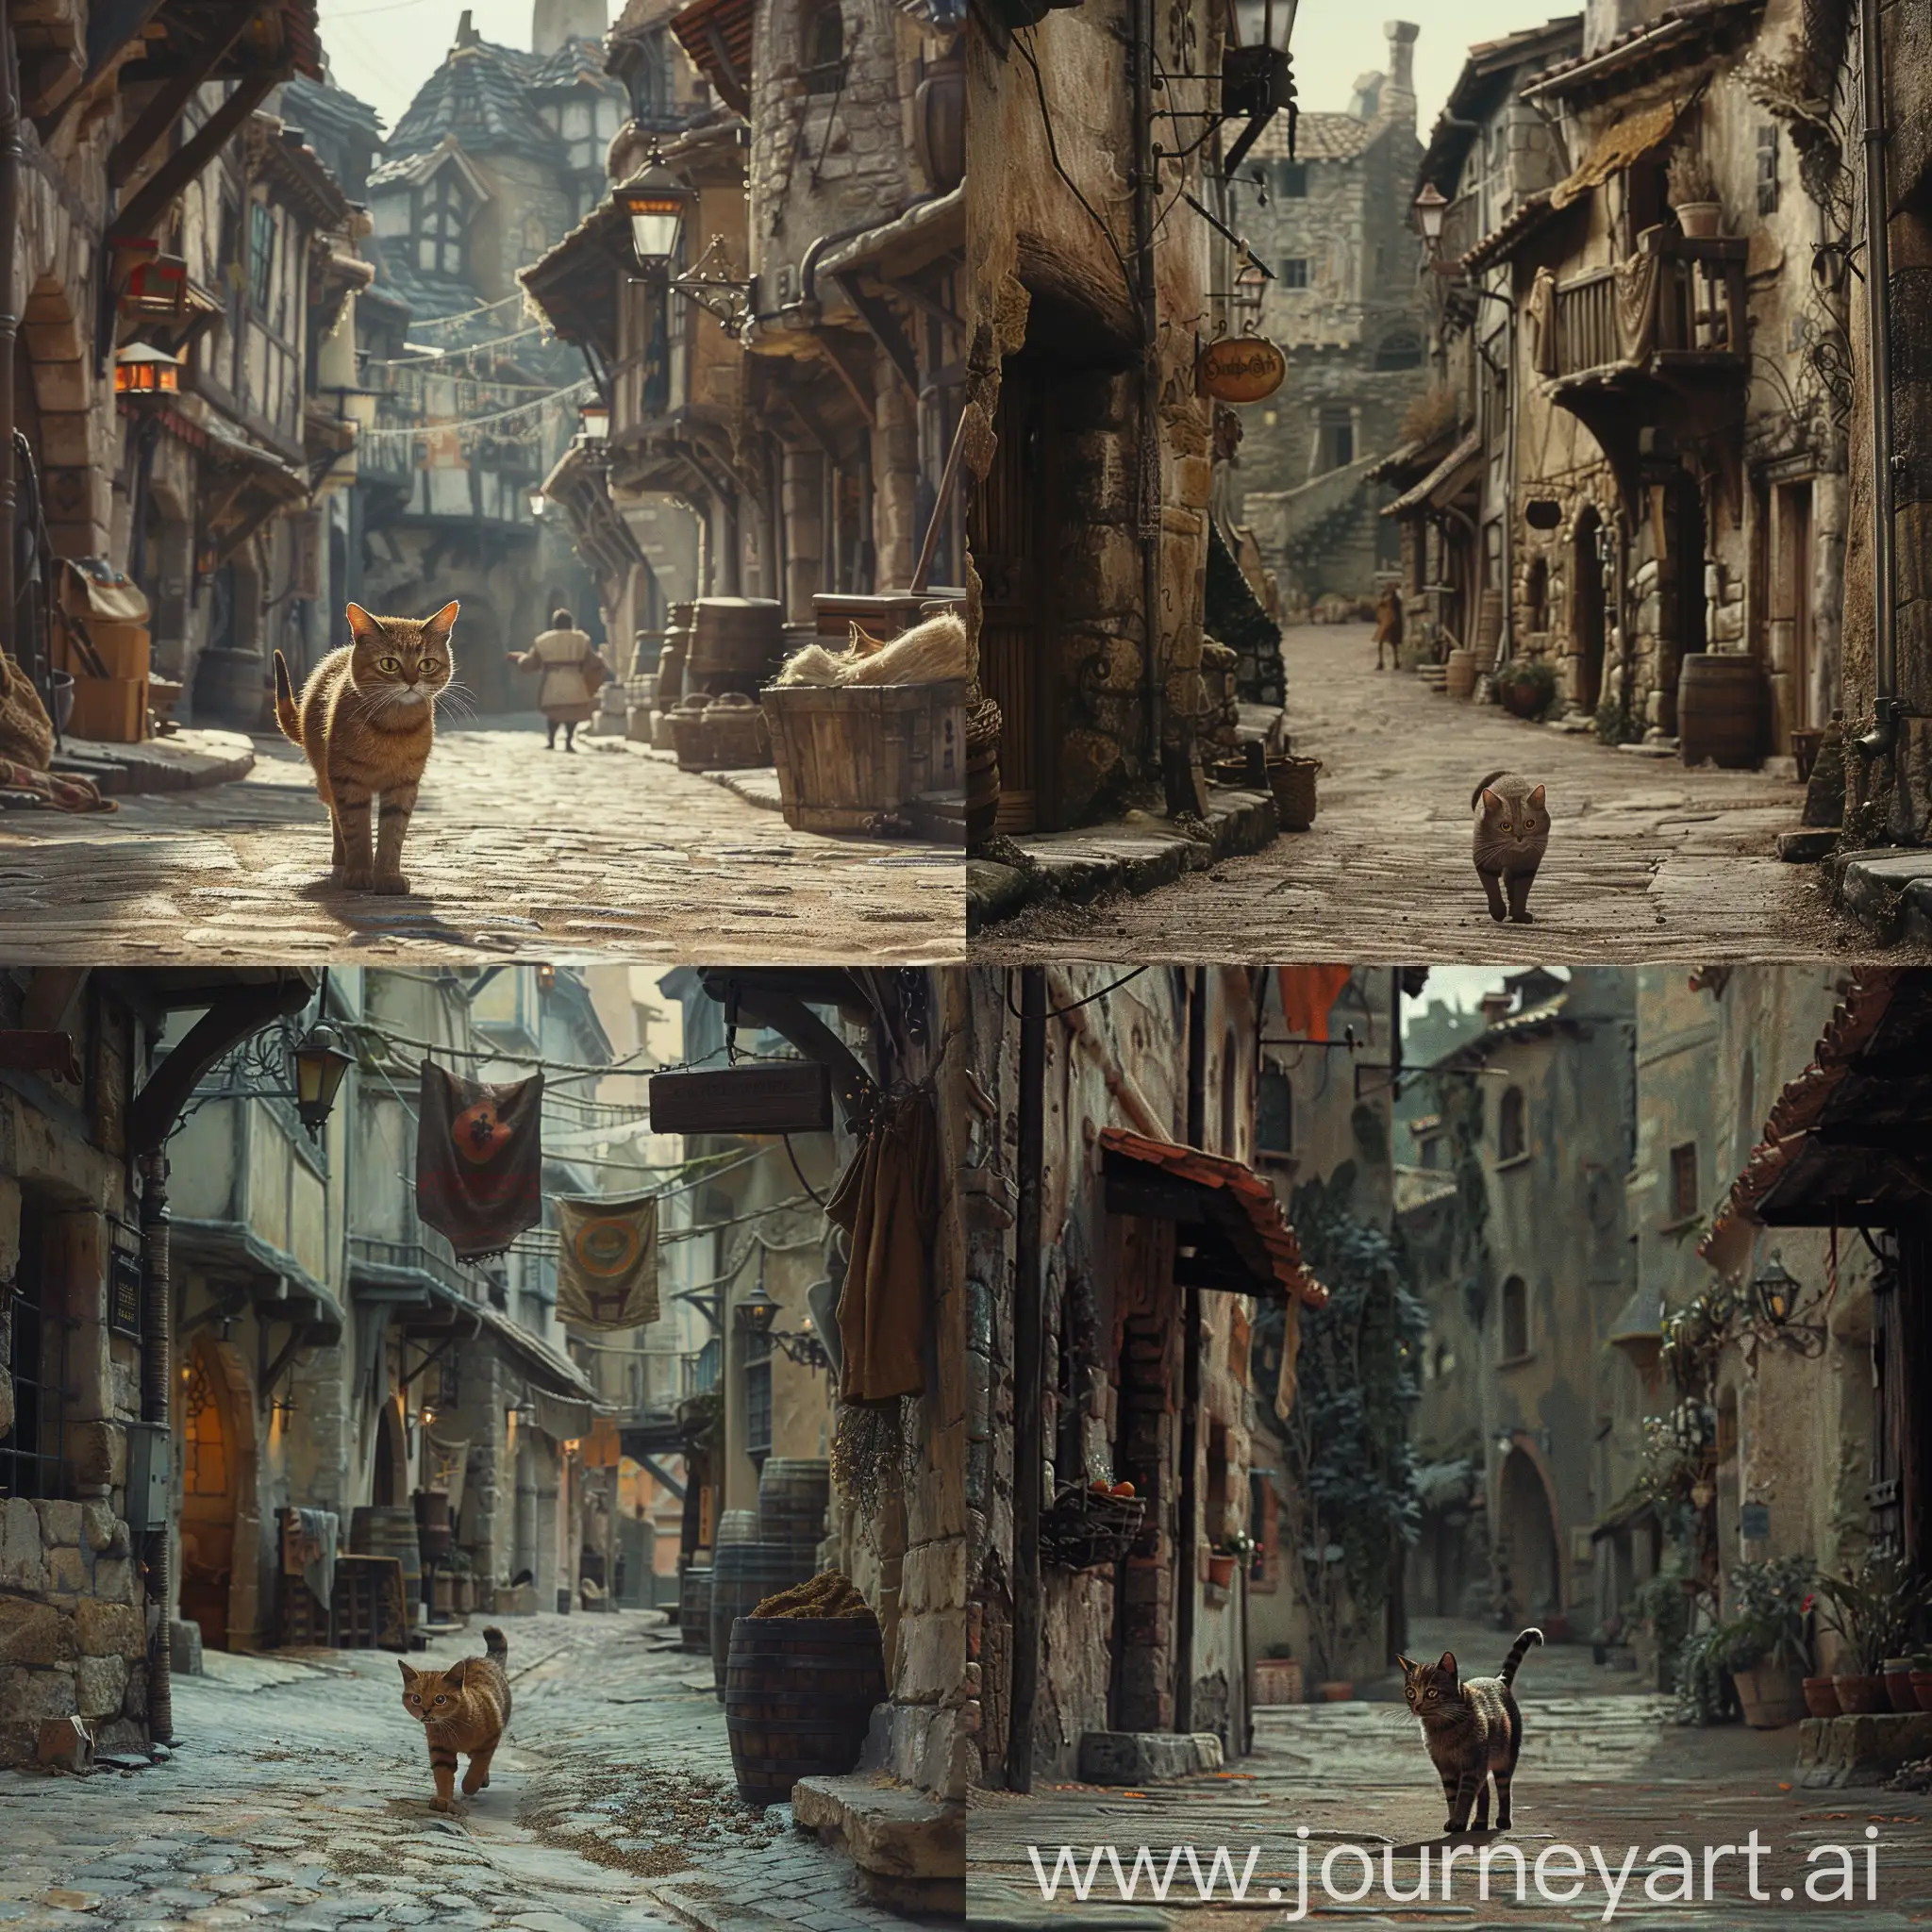 Medieval-Street-Scene-with-Cat-Studio-Ghibli-Inspired-Art